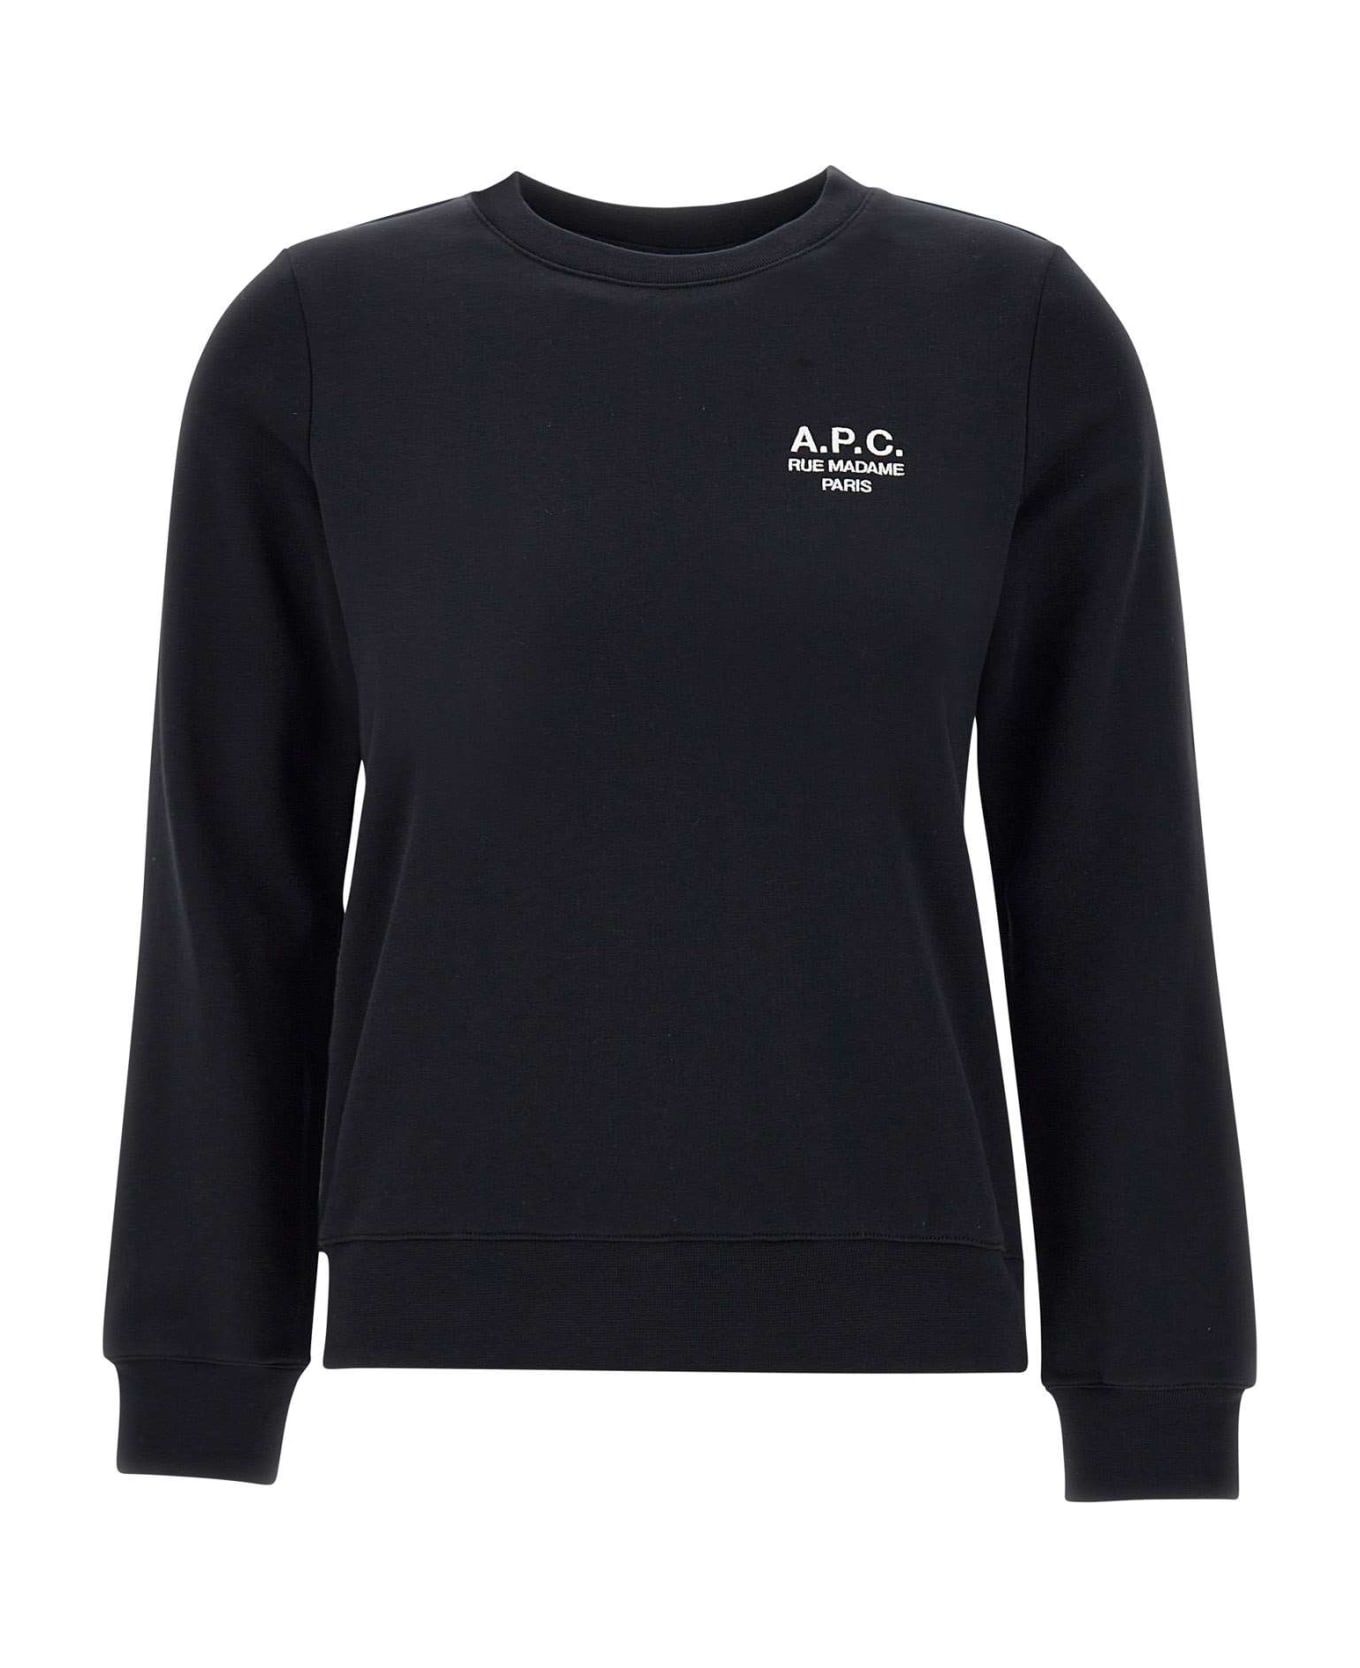 A.P.C. Skye Sweatshirt - BLACK